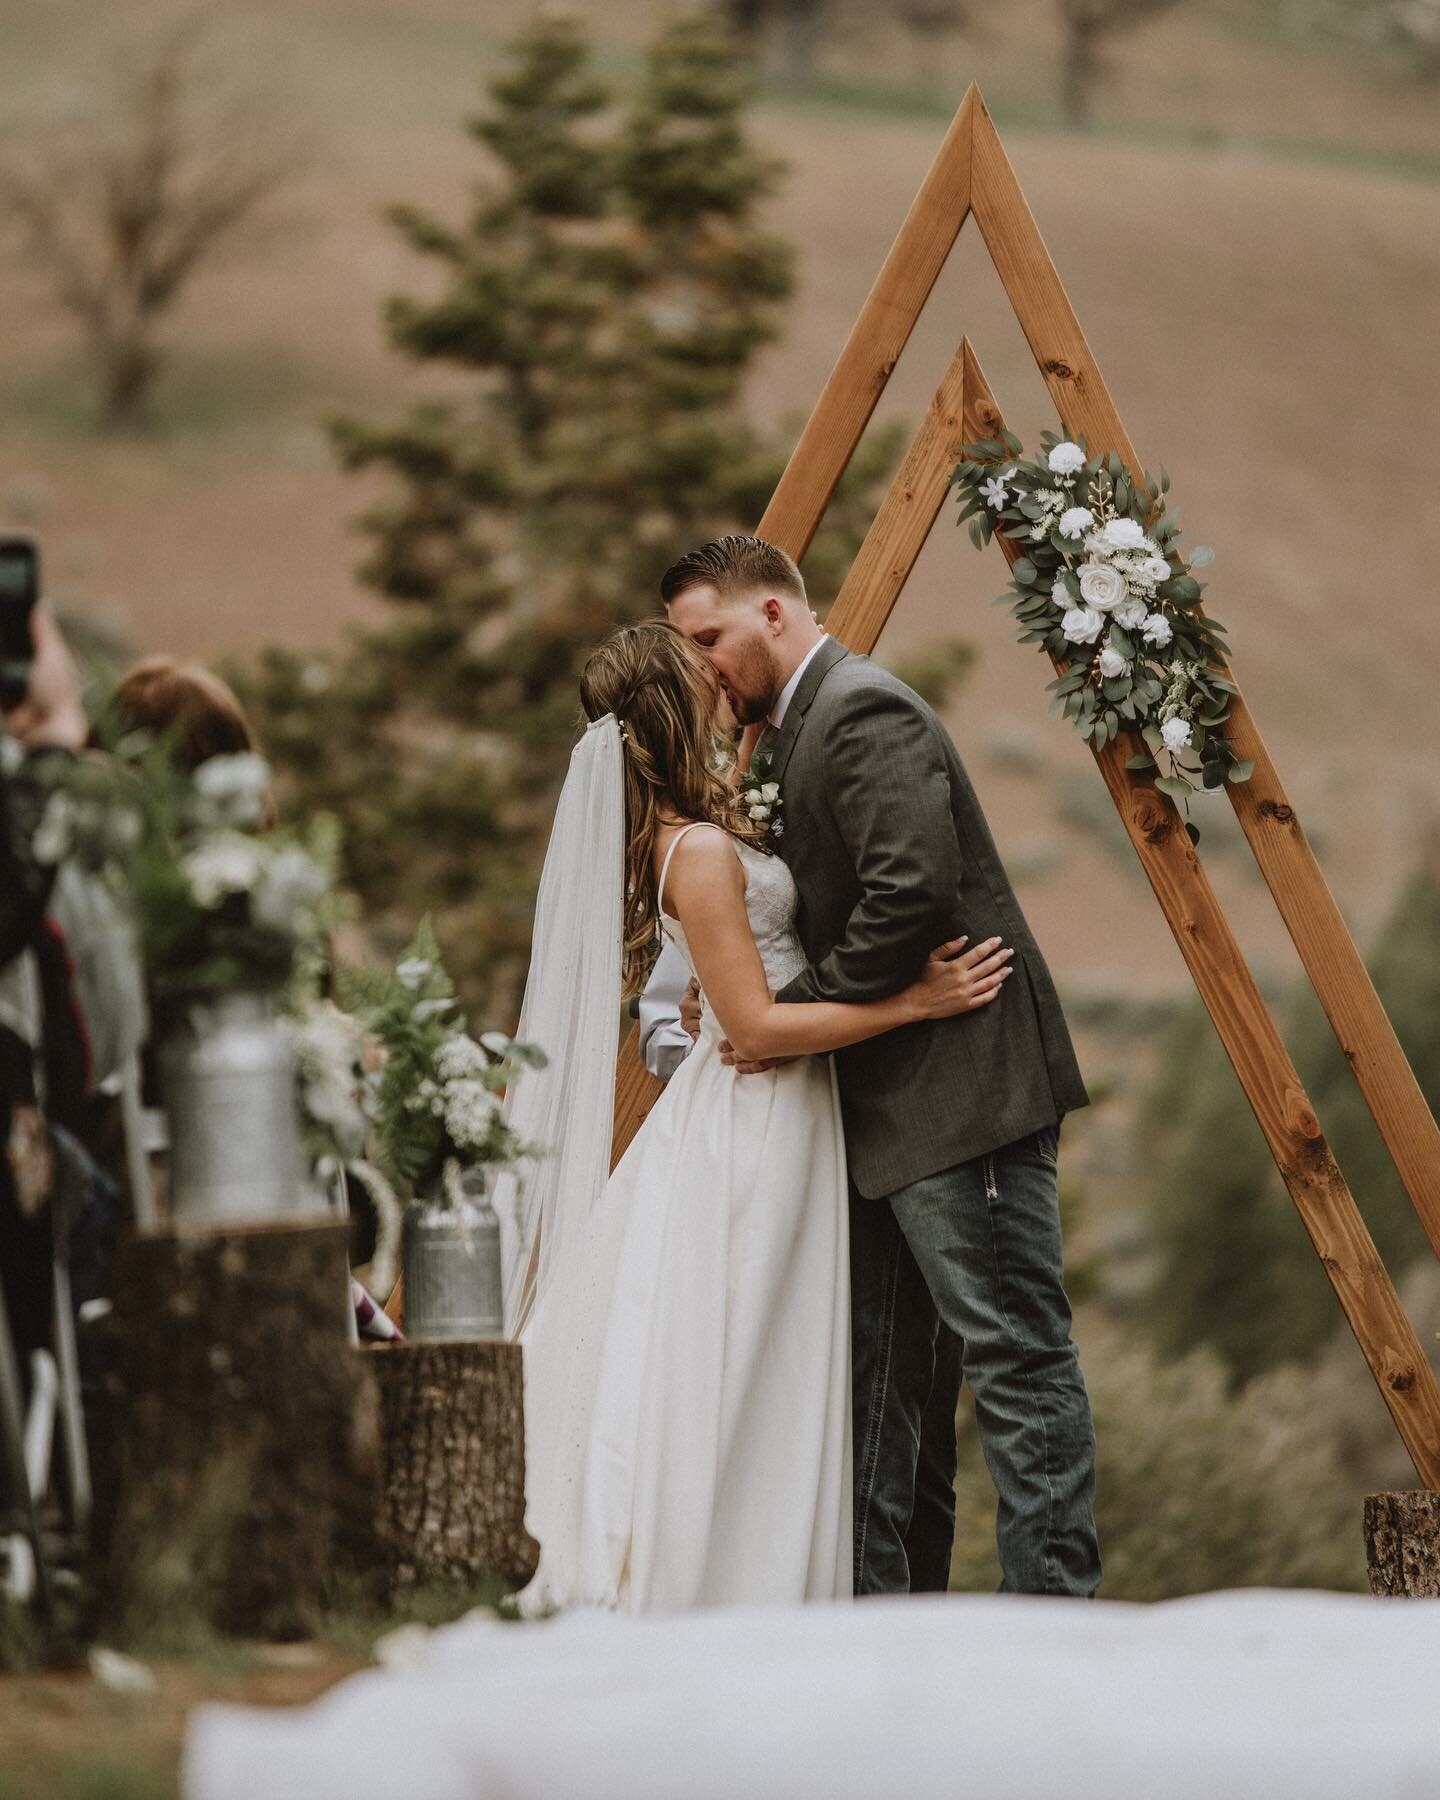 That moment you know you sealed the deal!! #married #youmaykissthebride #engaged #weddingphotographer  #losangelesweddingphotographer